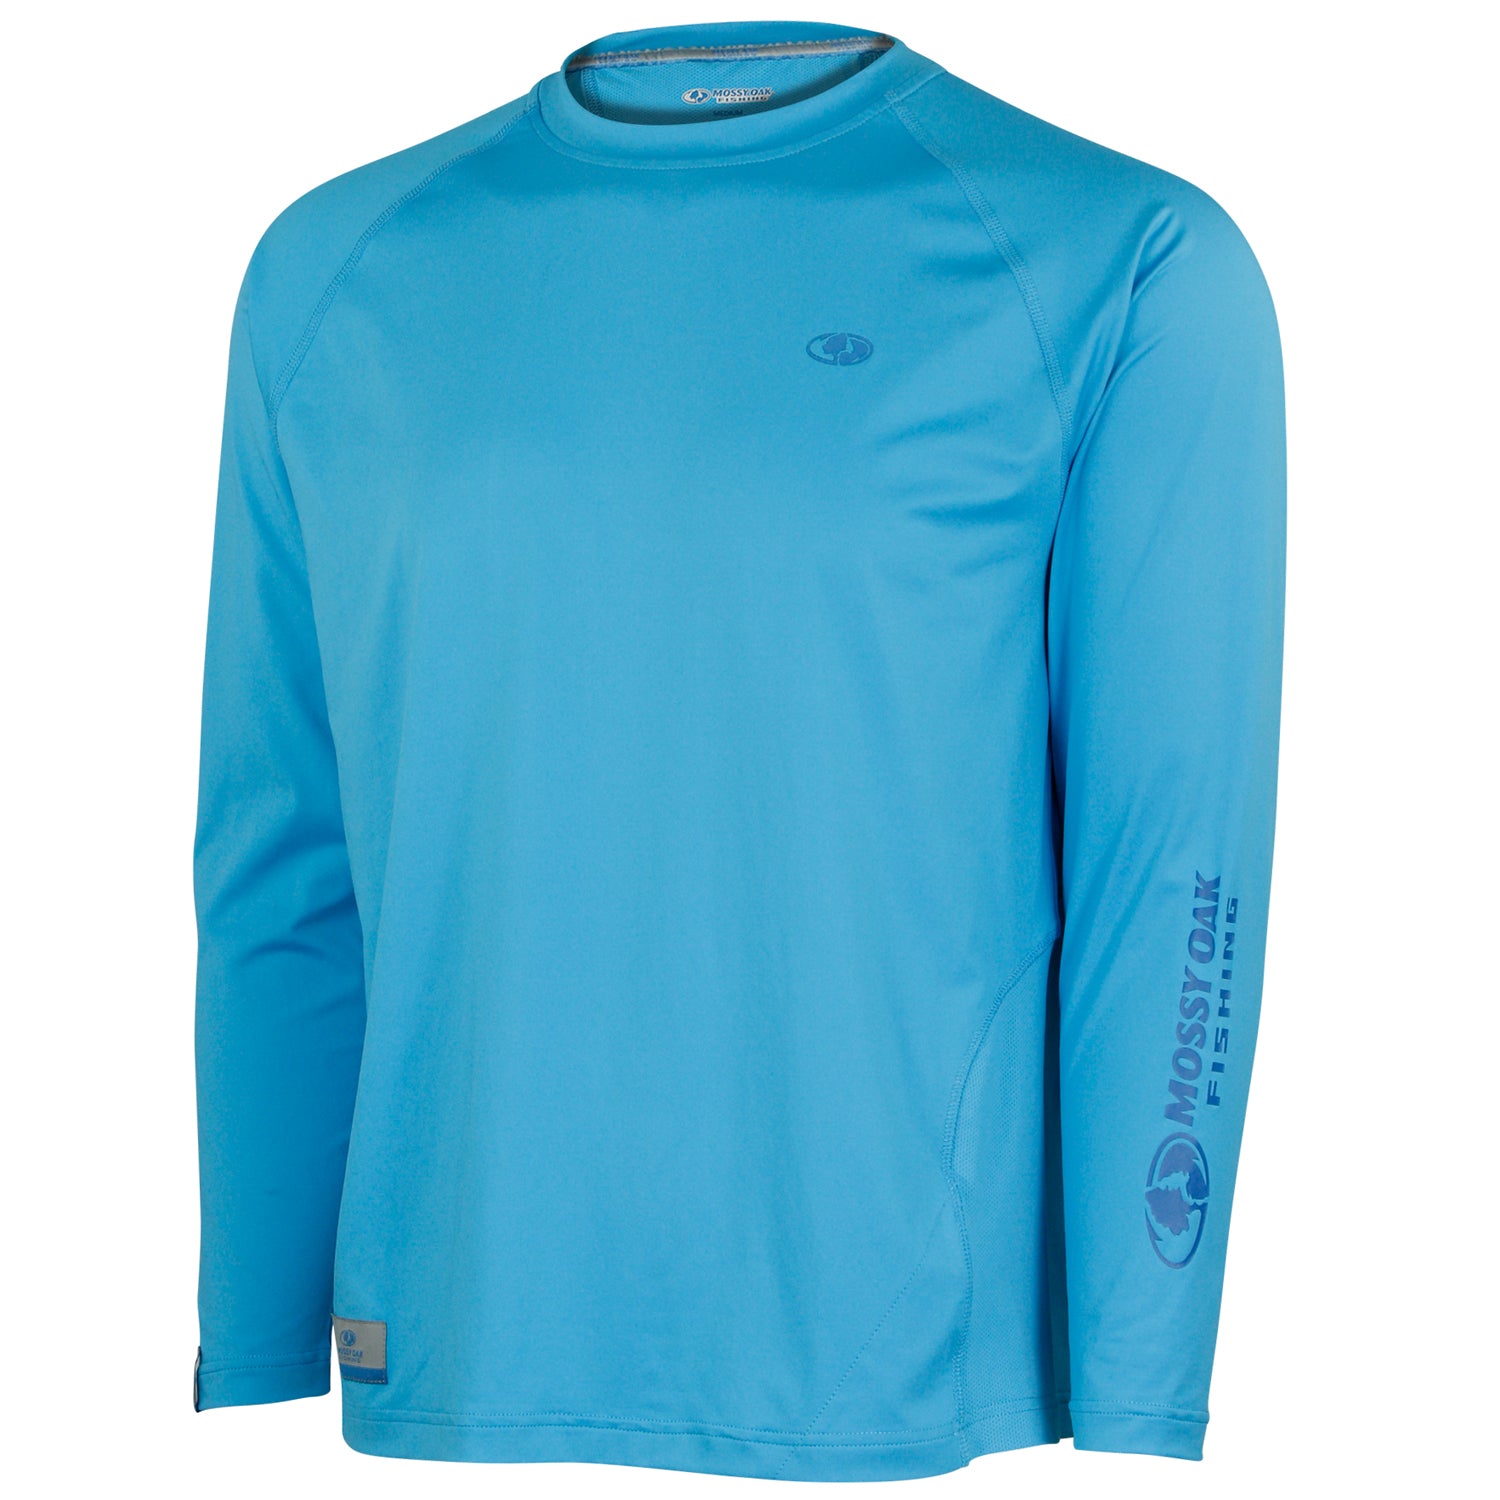 Mossy Oak Men's T-Shirt - Blue - XL